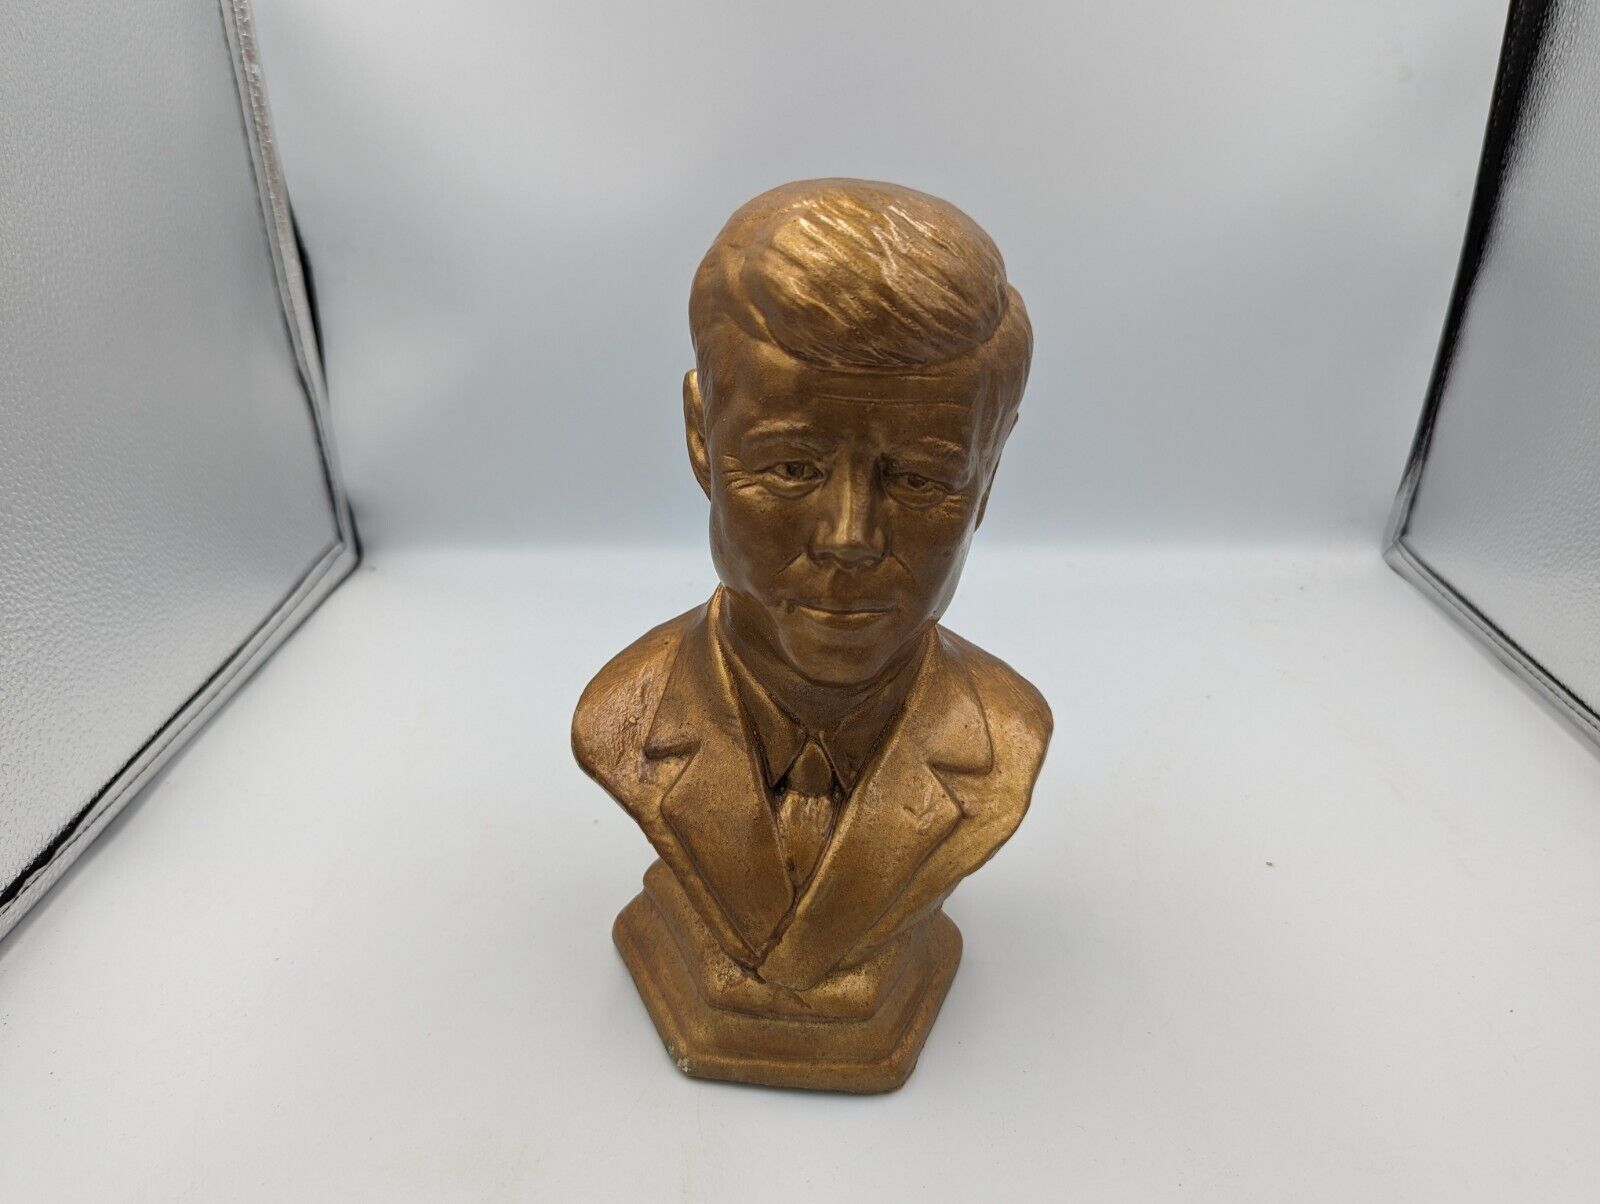 Vintage JFK John F Kennedy Bust Bronze Colored Ceramic 9